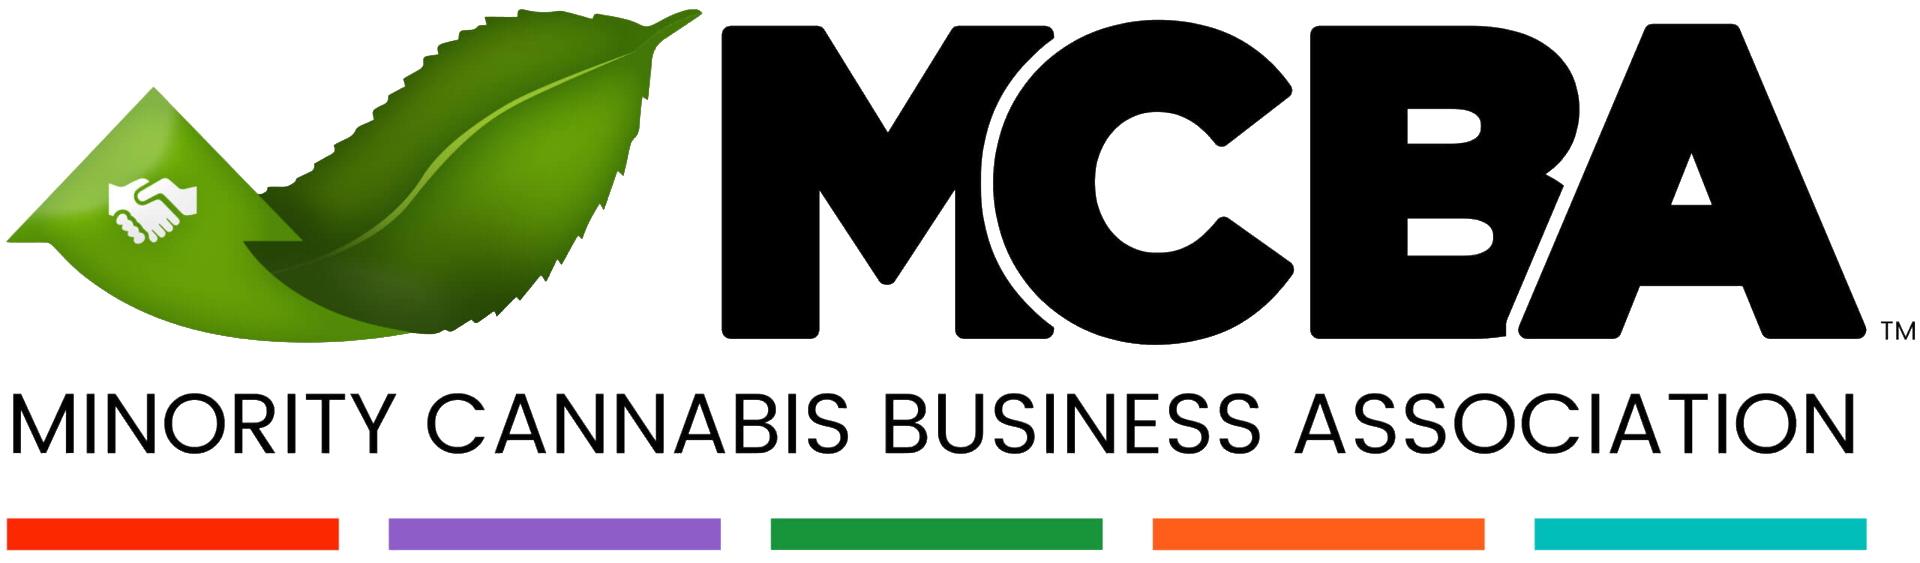 Minority Cannabis Business Association